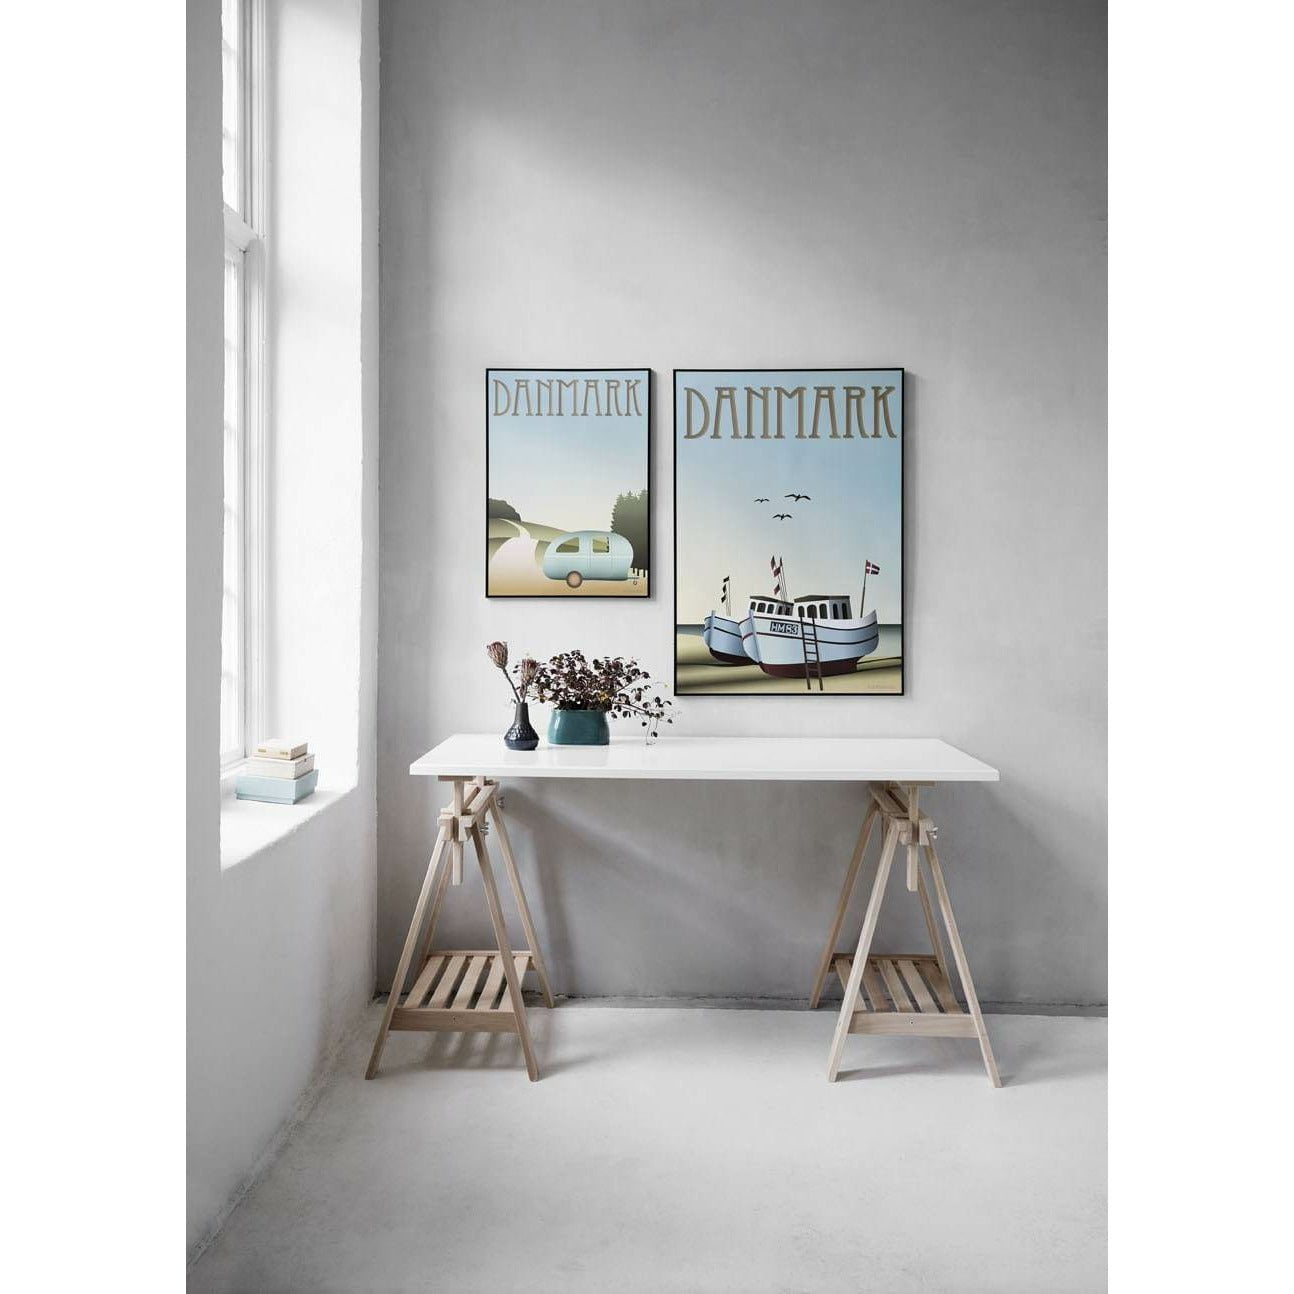 Poster di pescherecci Danimarca Vissevasse, 70 x100 cm